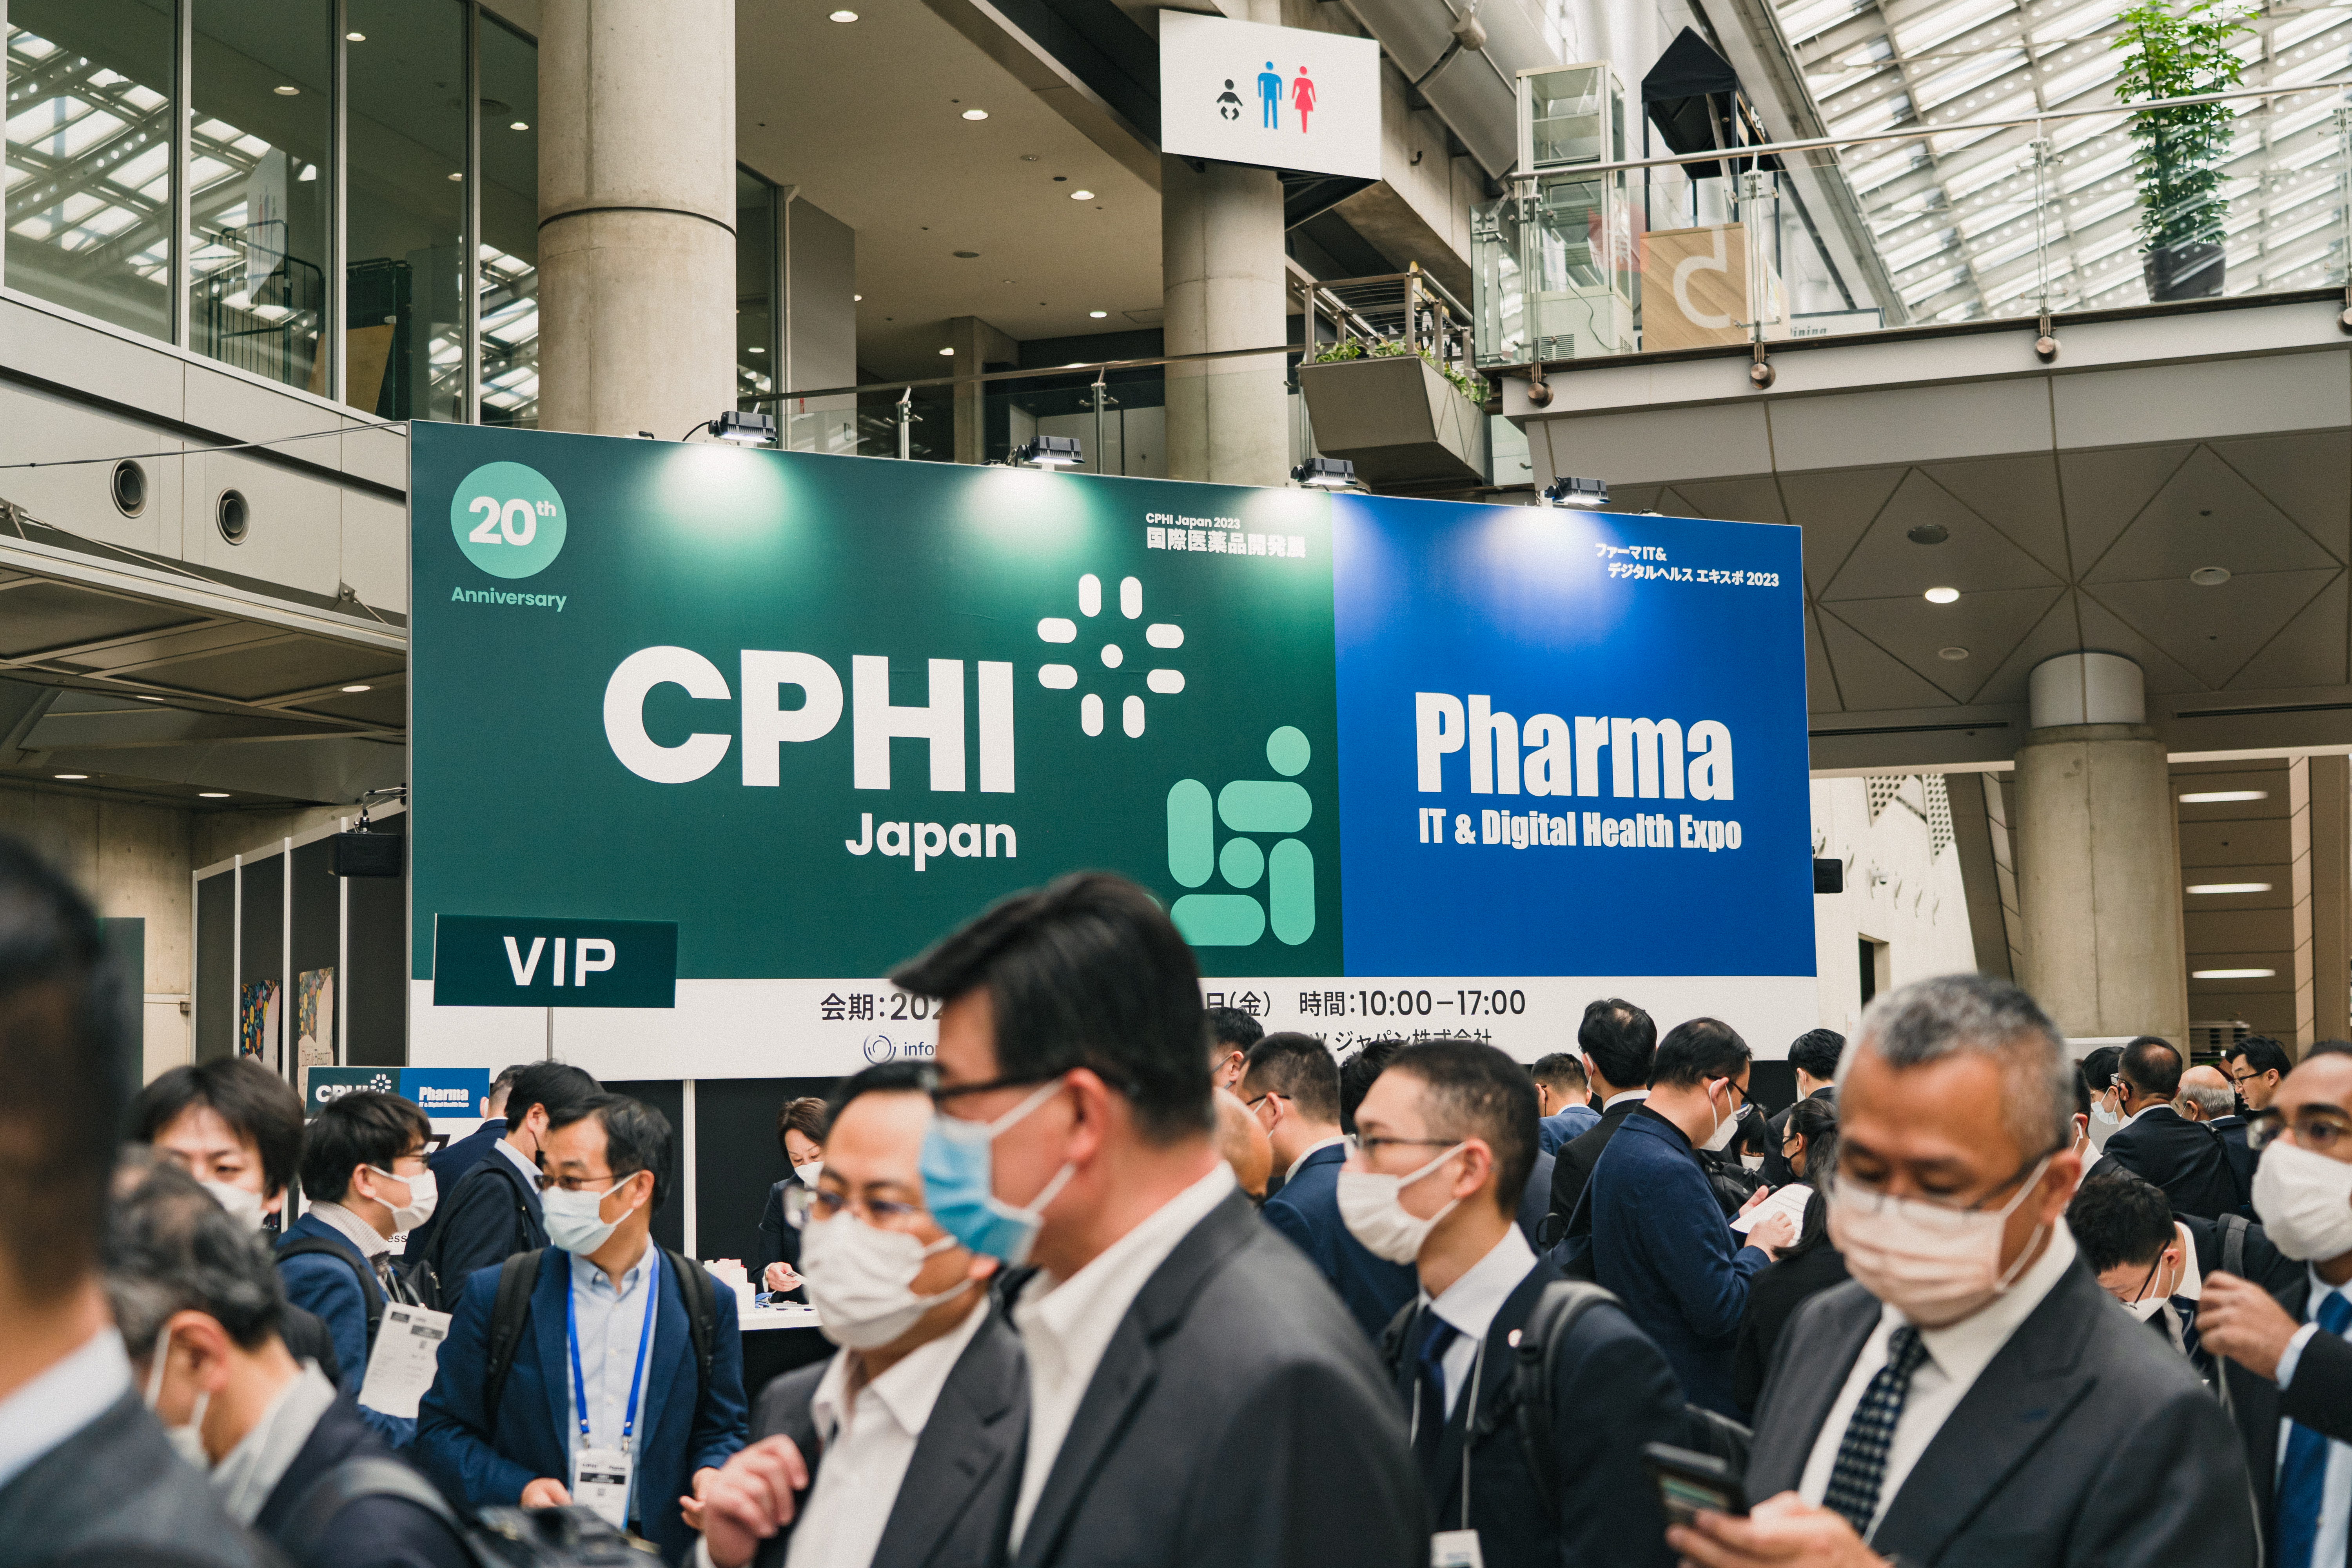 CPHI Japan - Pharma members in entrance hall